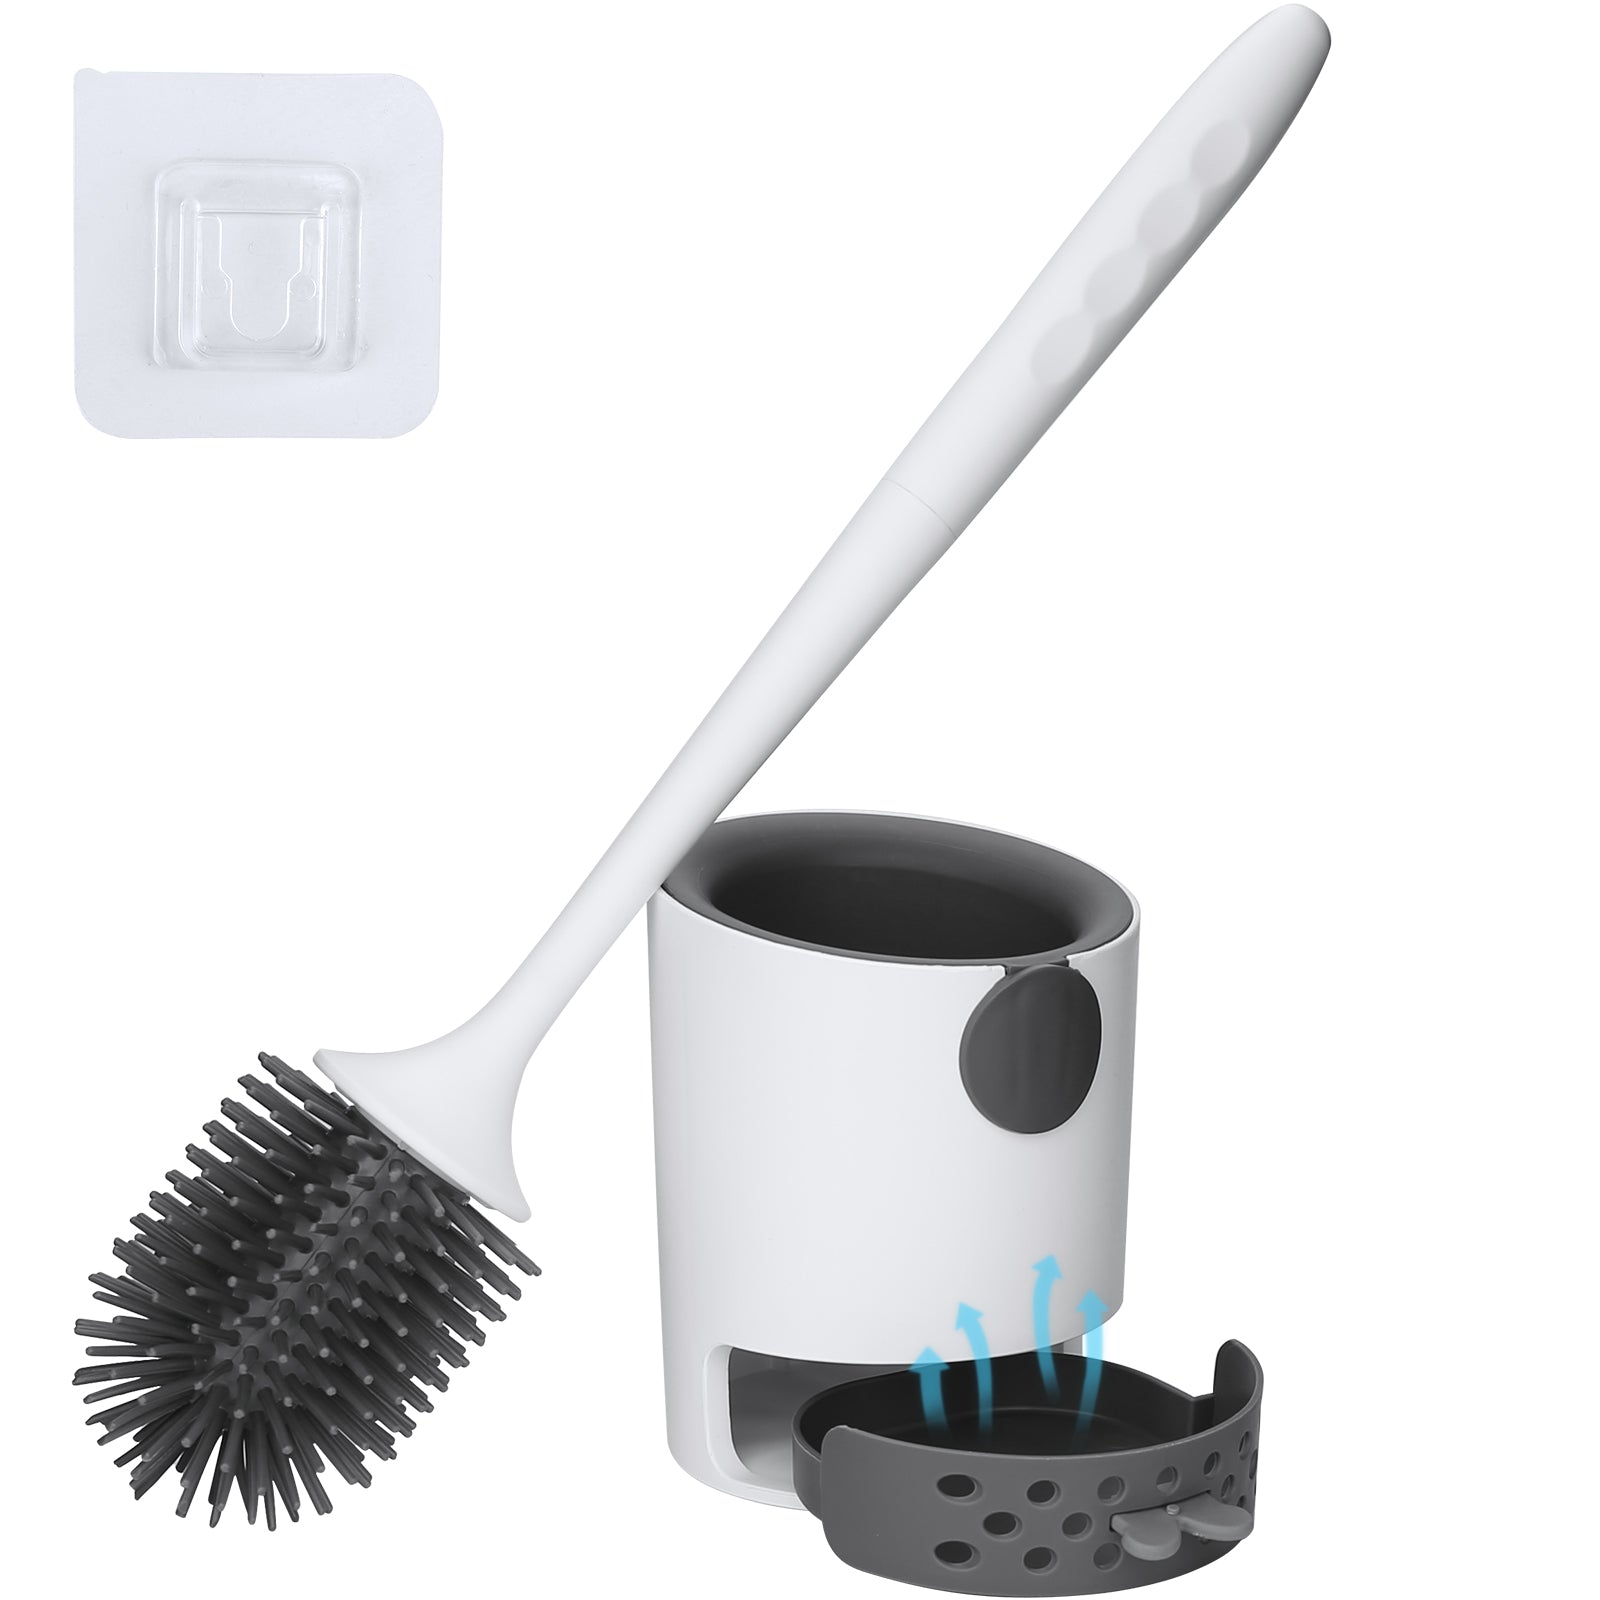 HDX Toilet Bowl Brush and Holder 315MBHDXRM - The Home Depot